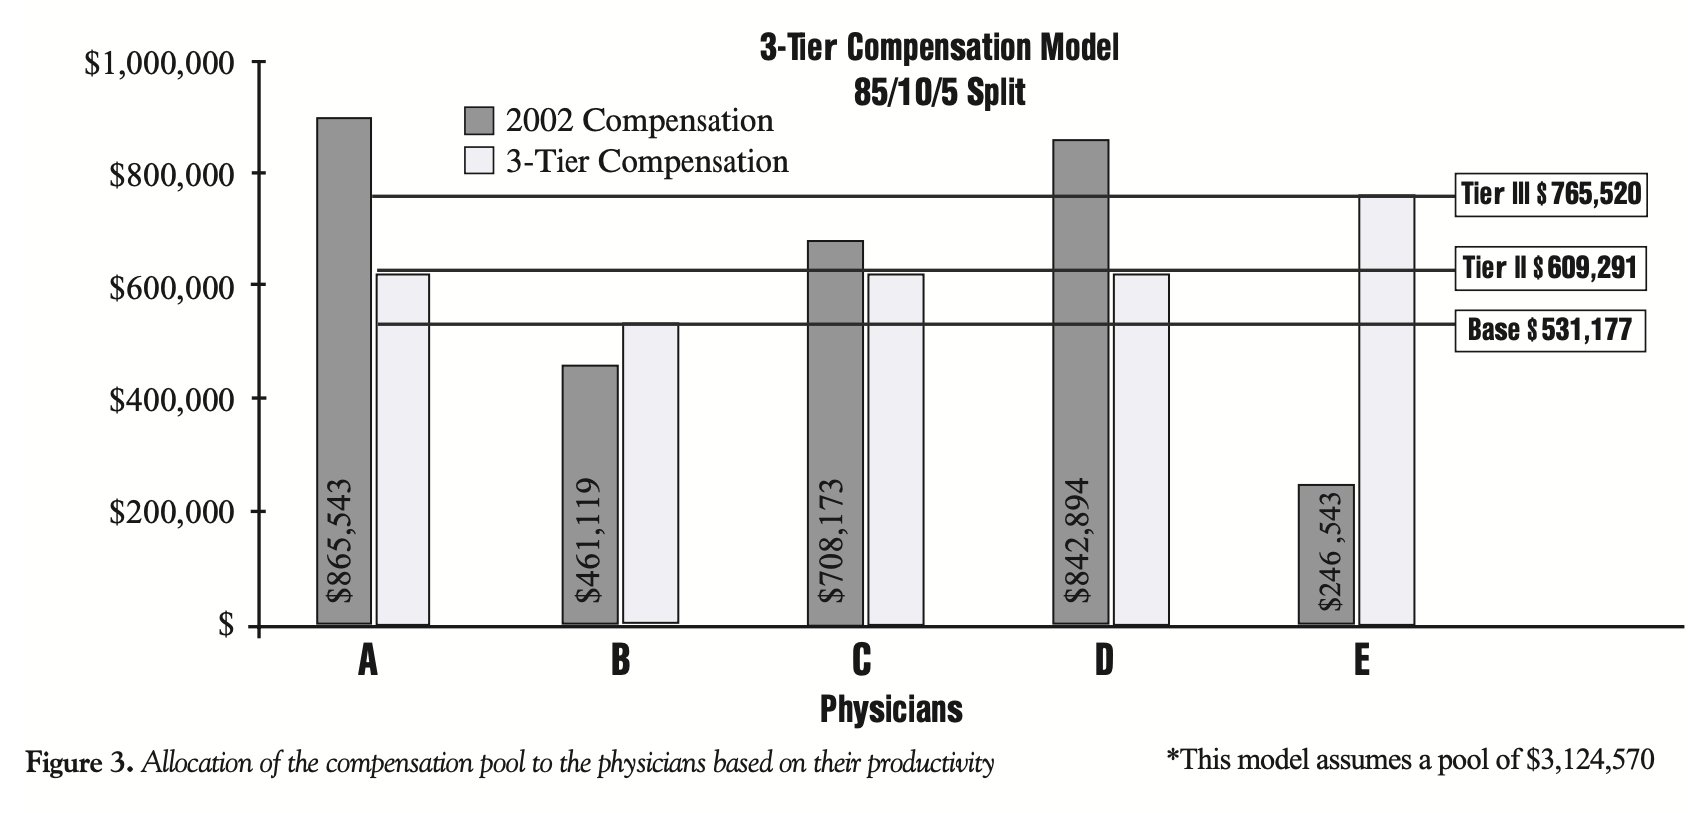 3-Tier Compensation Model